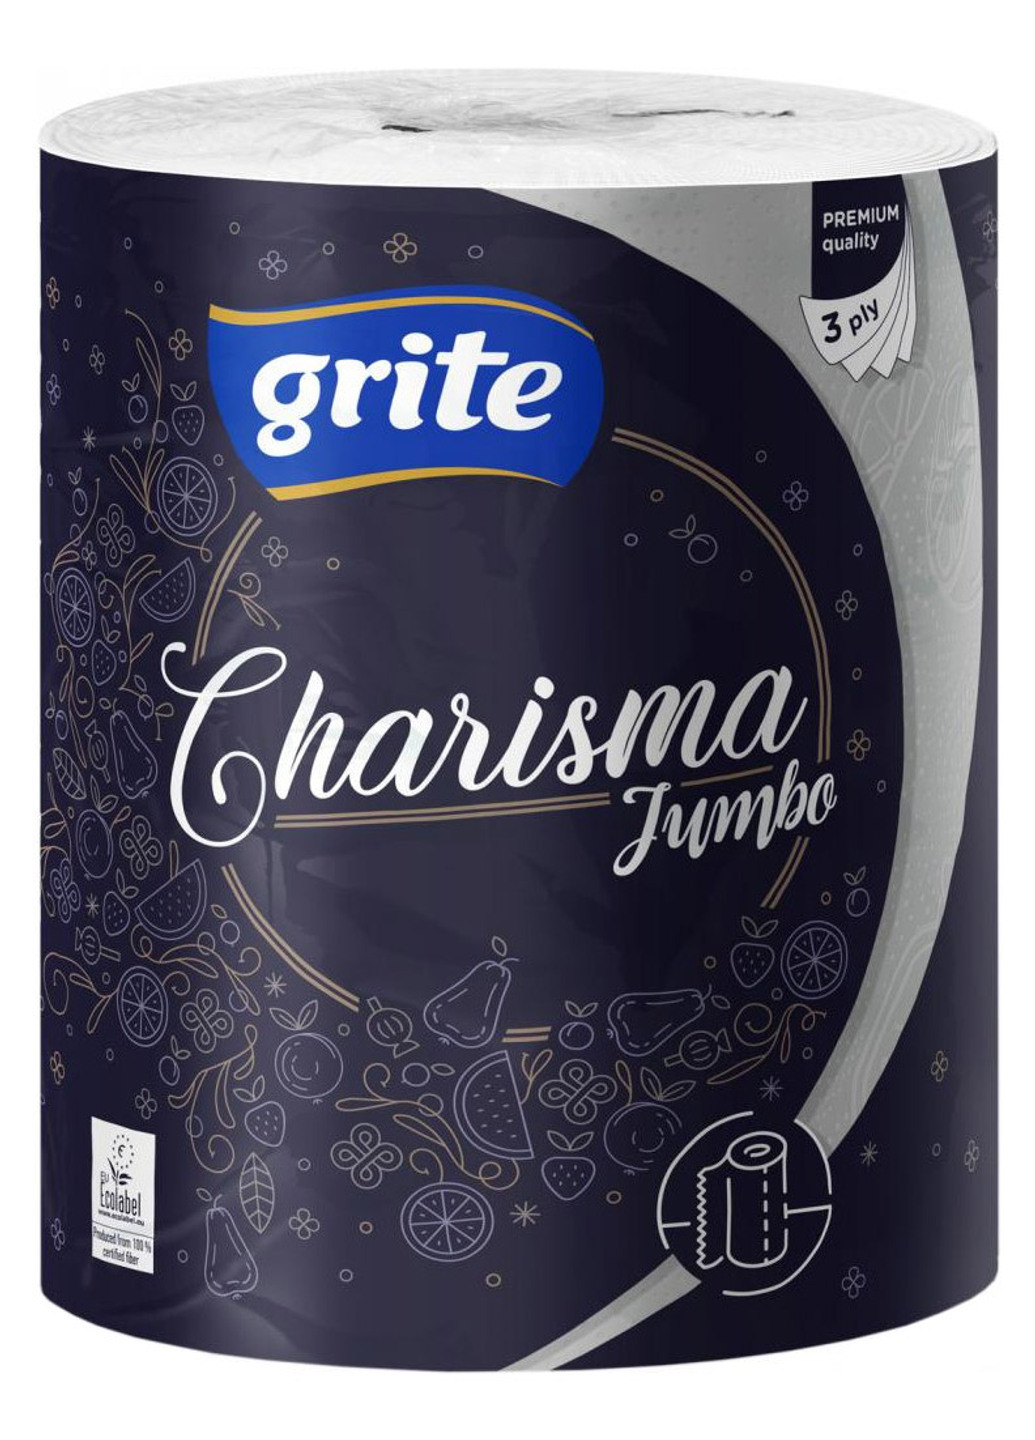 Полотенца бумажные Charisma Jambo 1 рулон Grite (199671324)